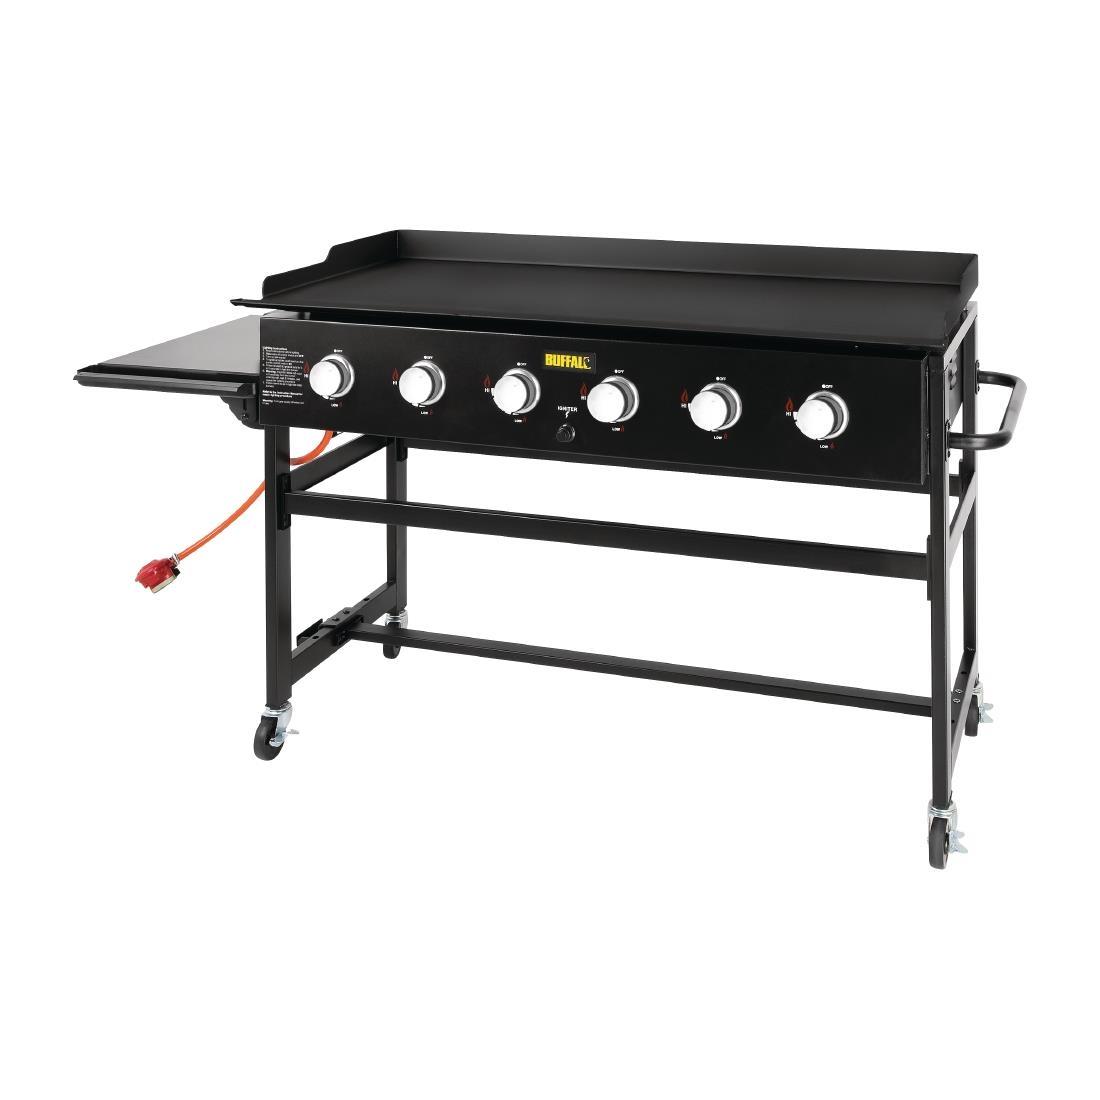 Buffalo 6 Burner LPG Barbecue Griddle - CY265  - 2